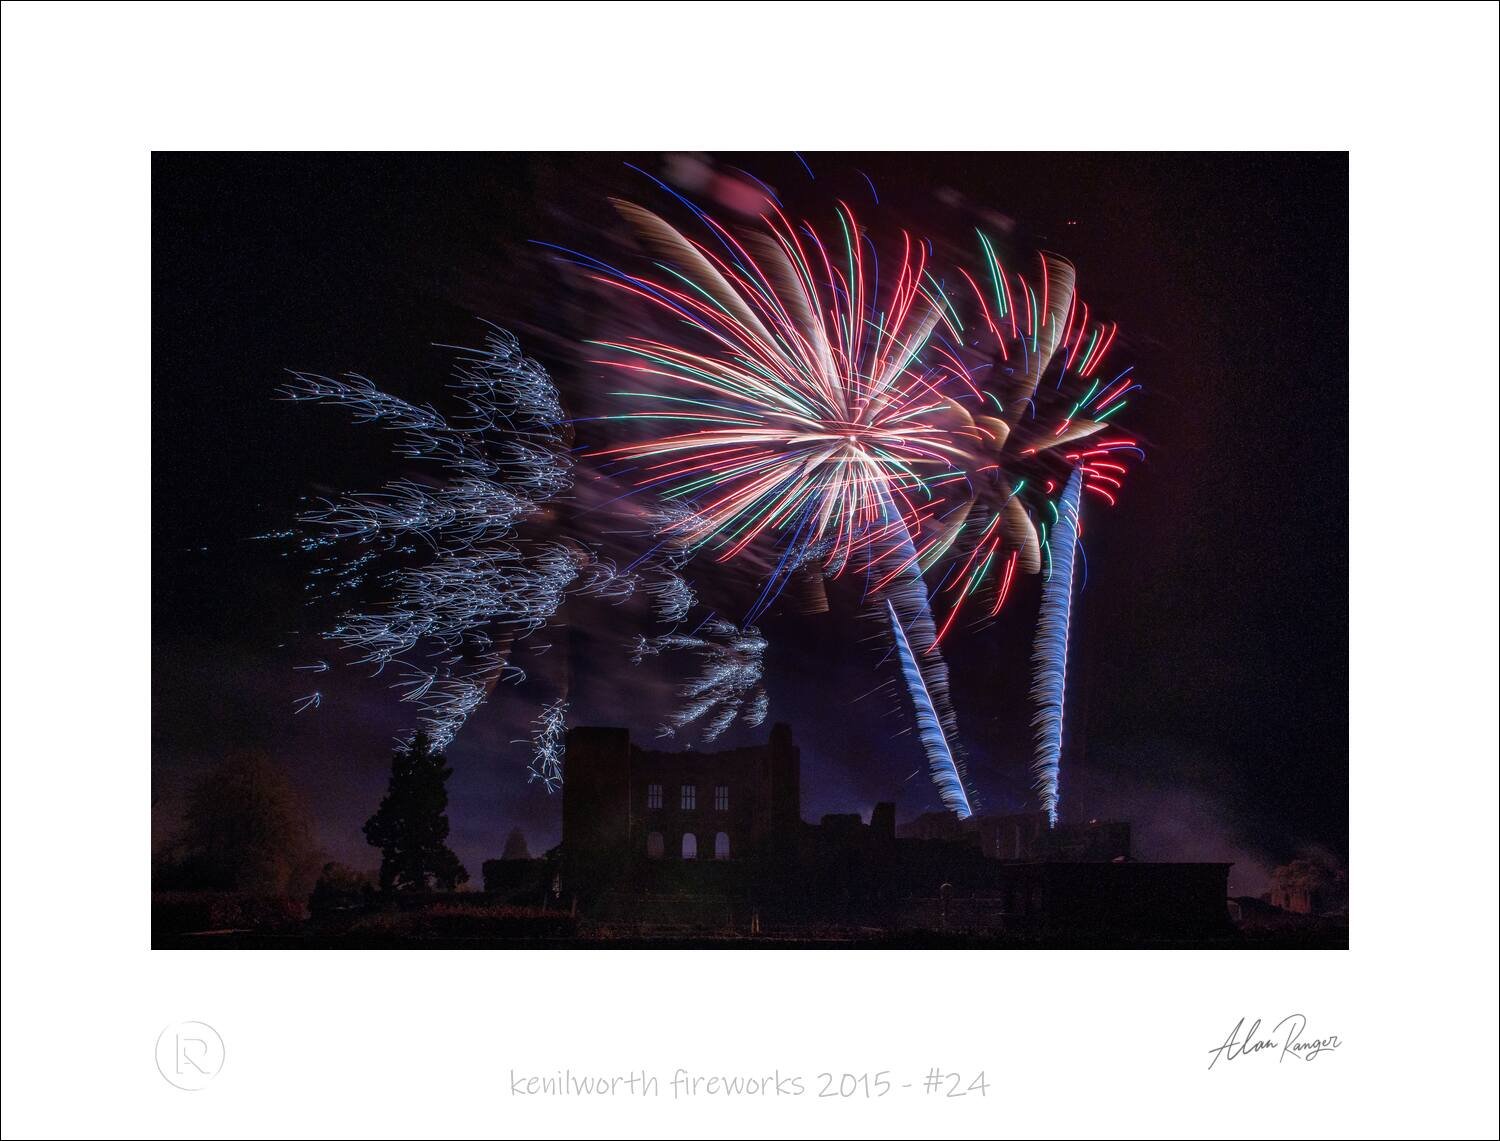 kenilworth fireworks 2015 - #24.jpg